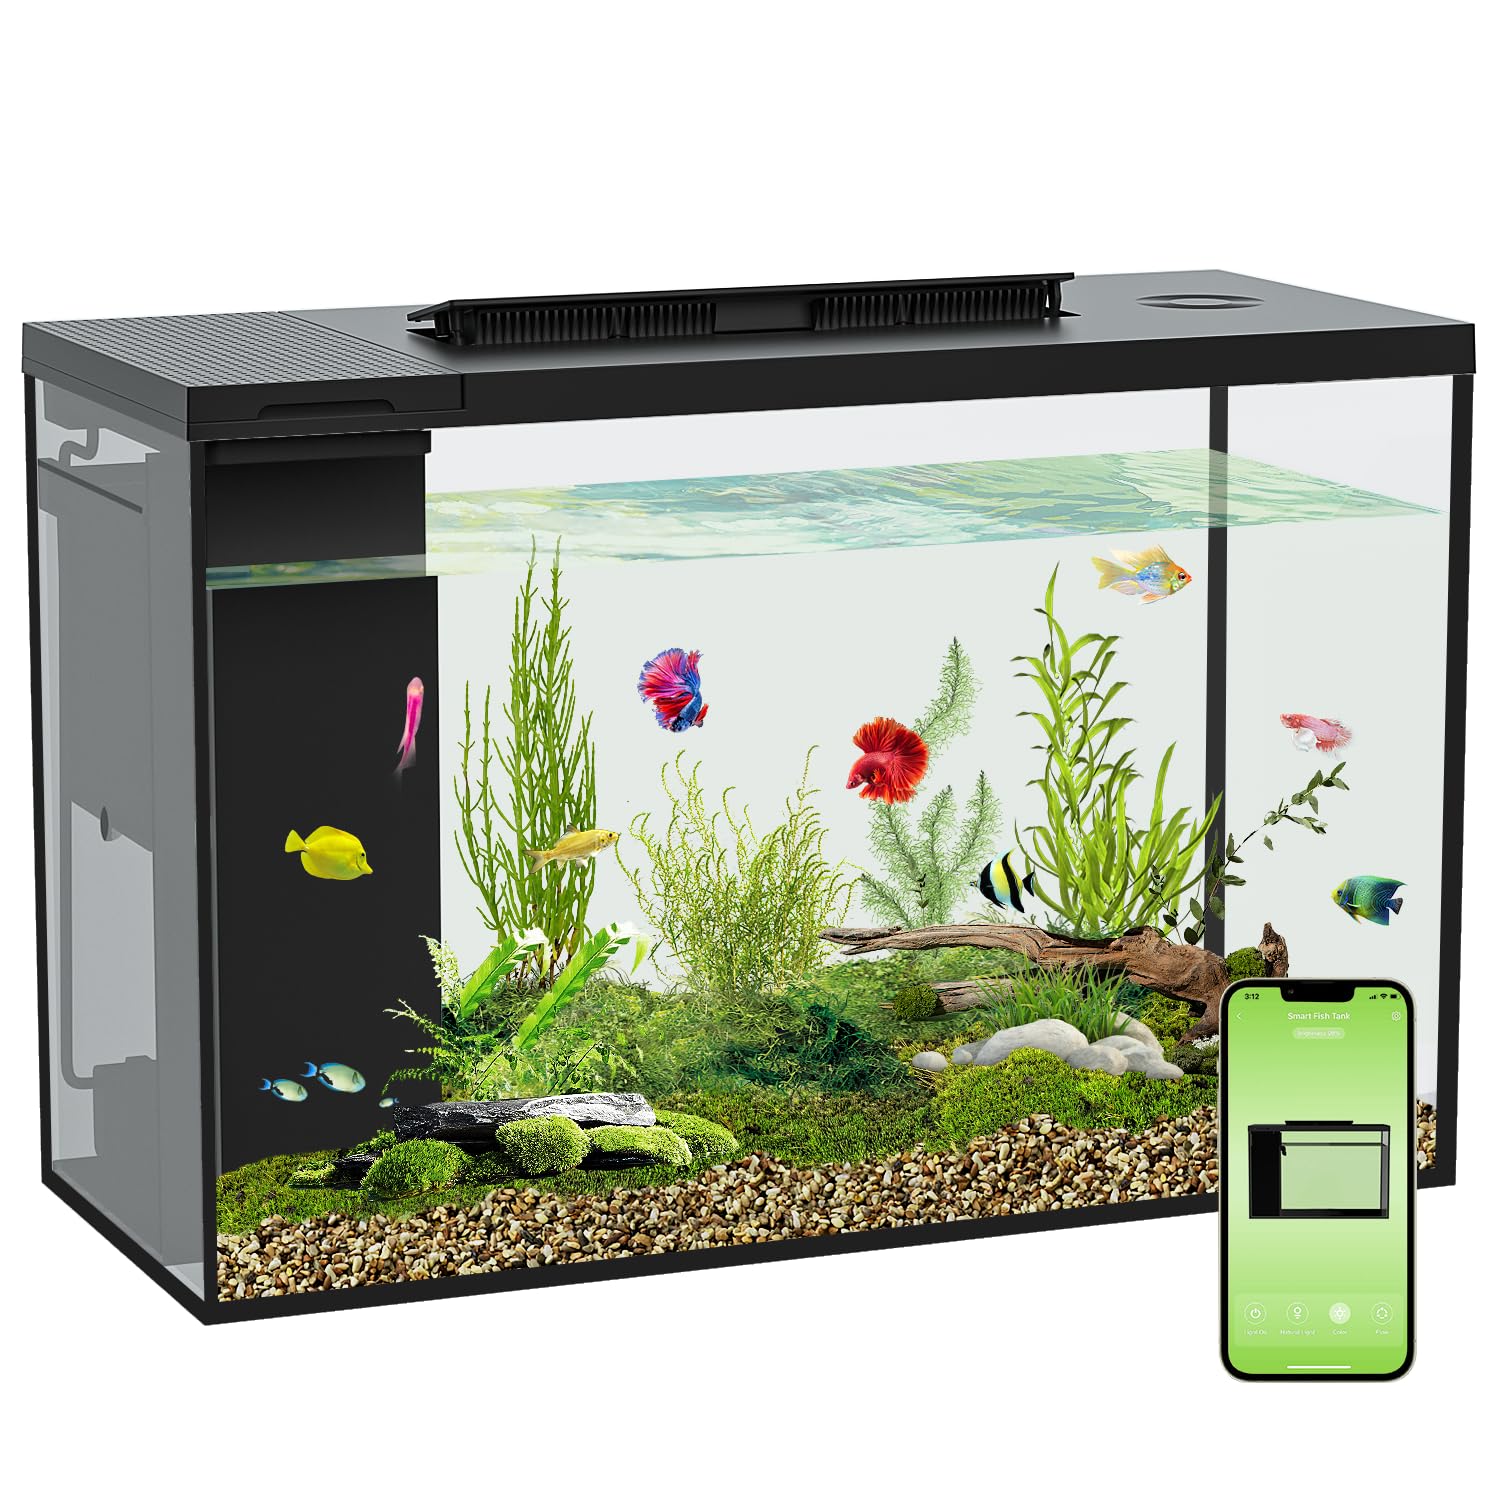 ERAARK 5 Gallon Betta Fish Tank: Self-Cleaning Smart Aquarium Kit